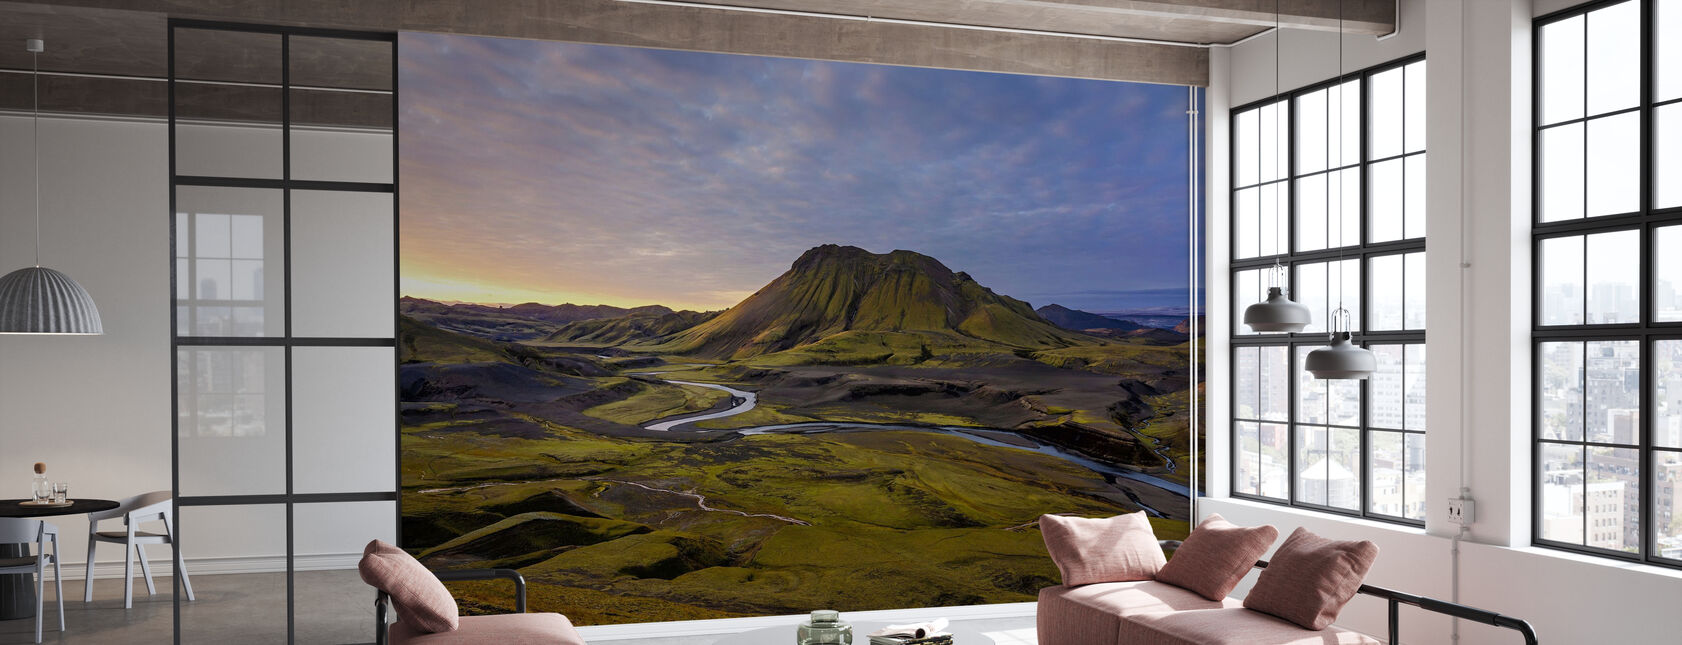 Iceland Highlands - Wallpaper - Office